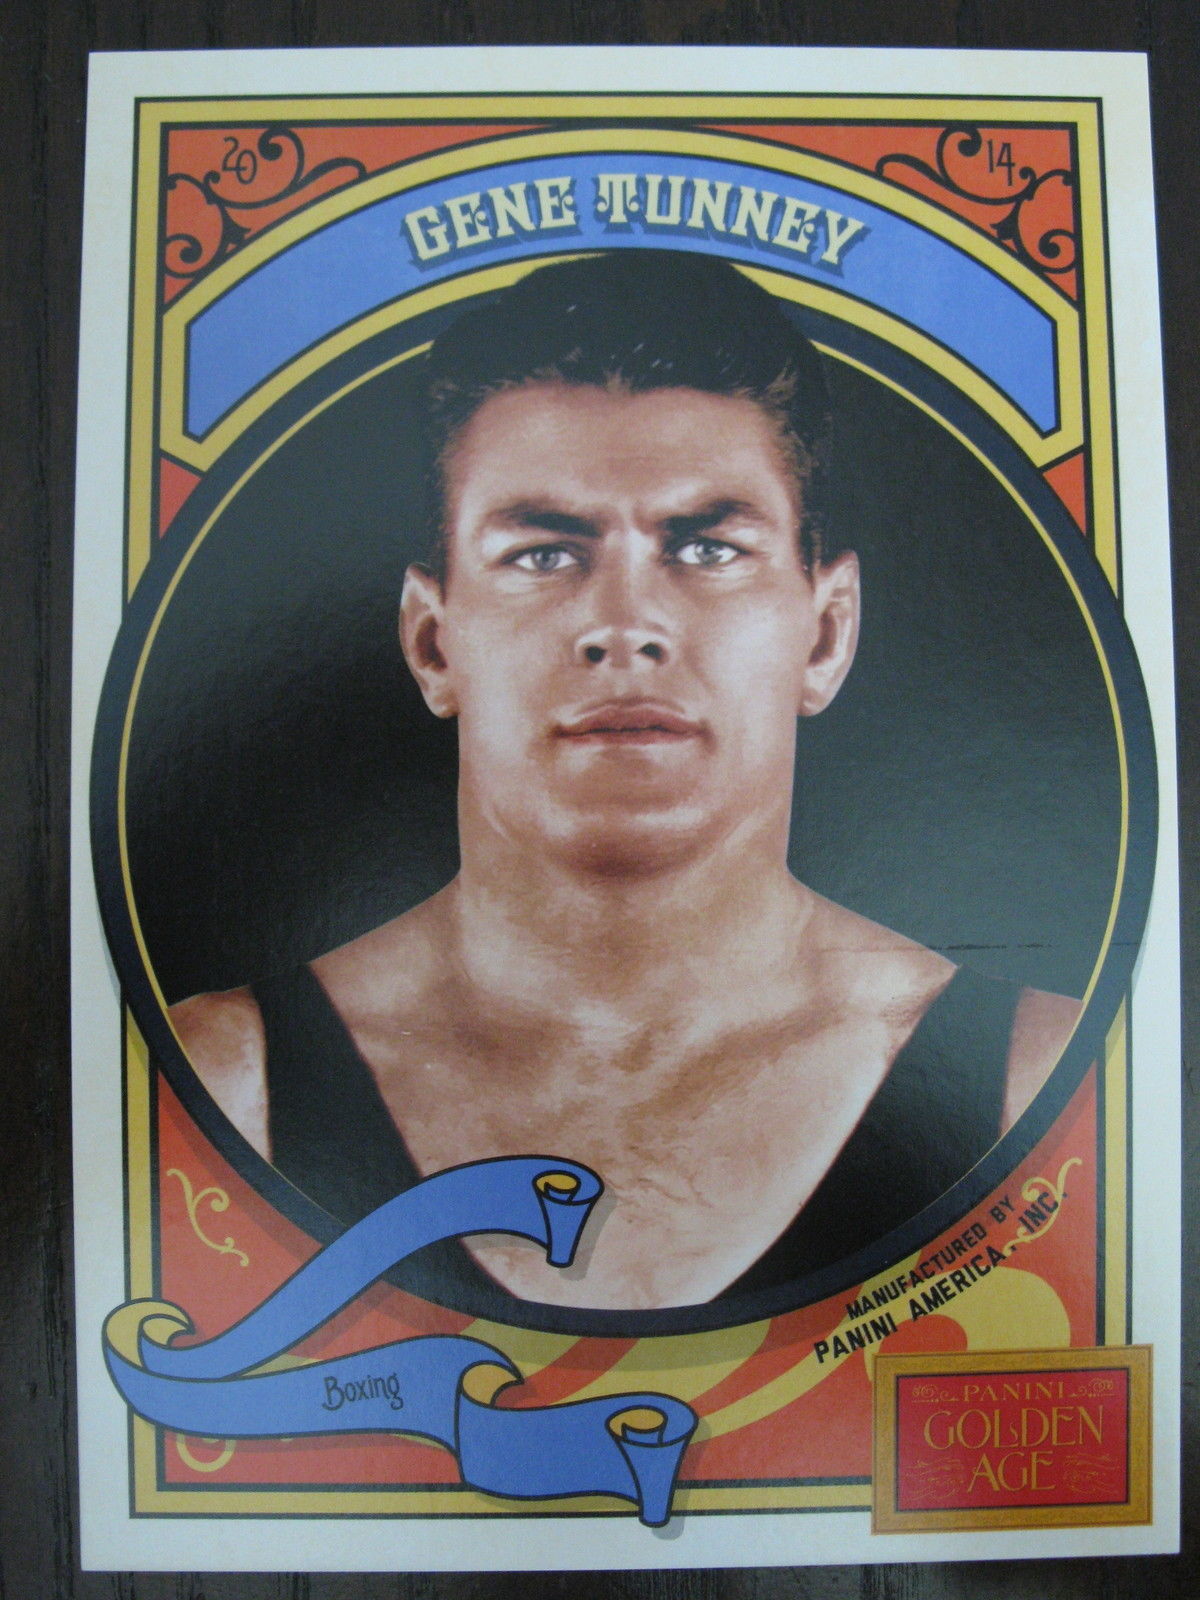  Gene Tunney player image